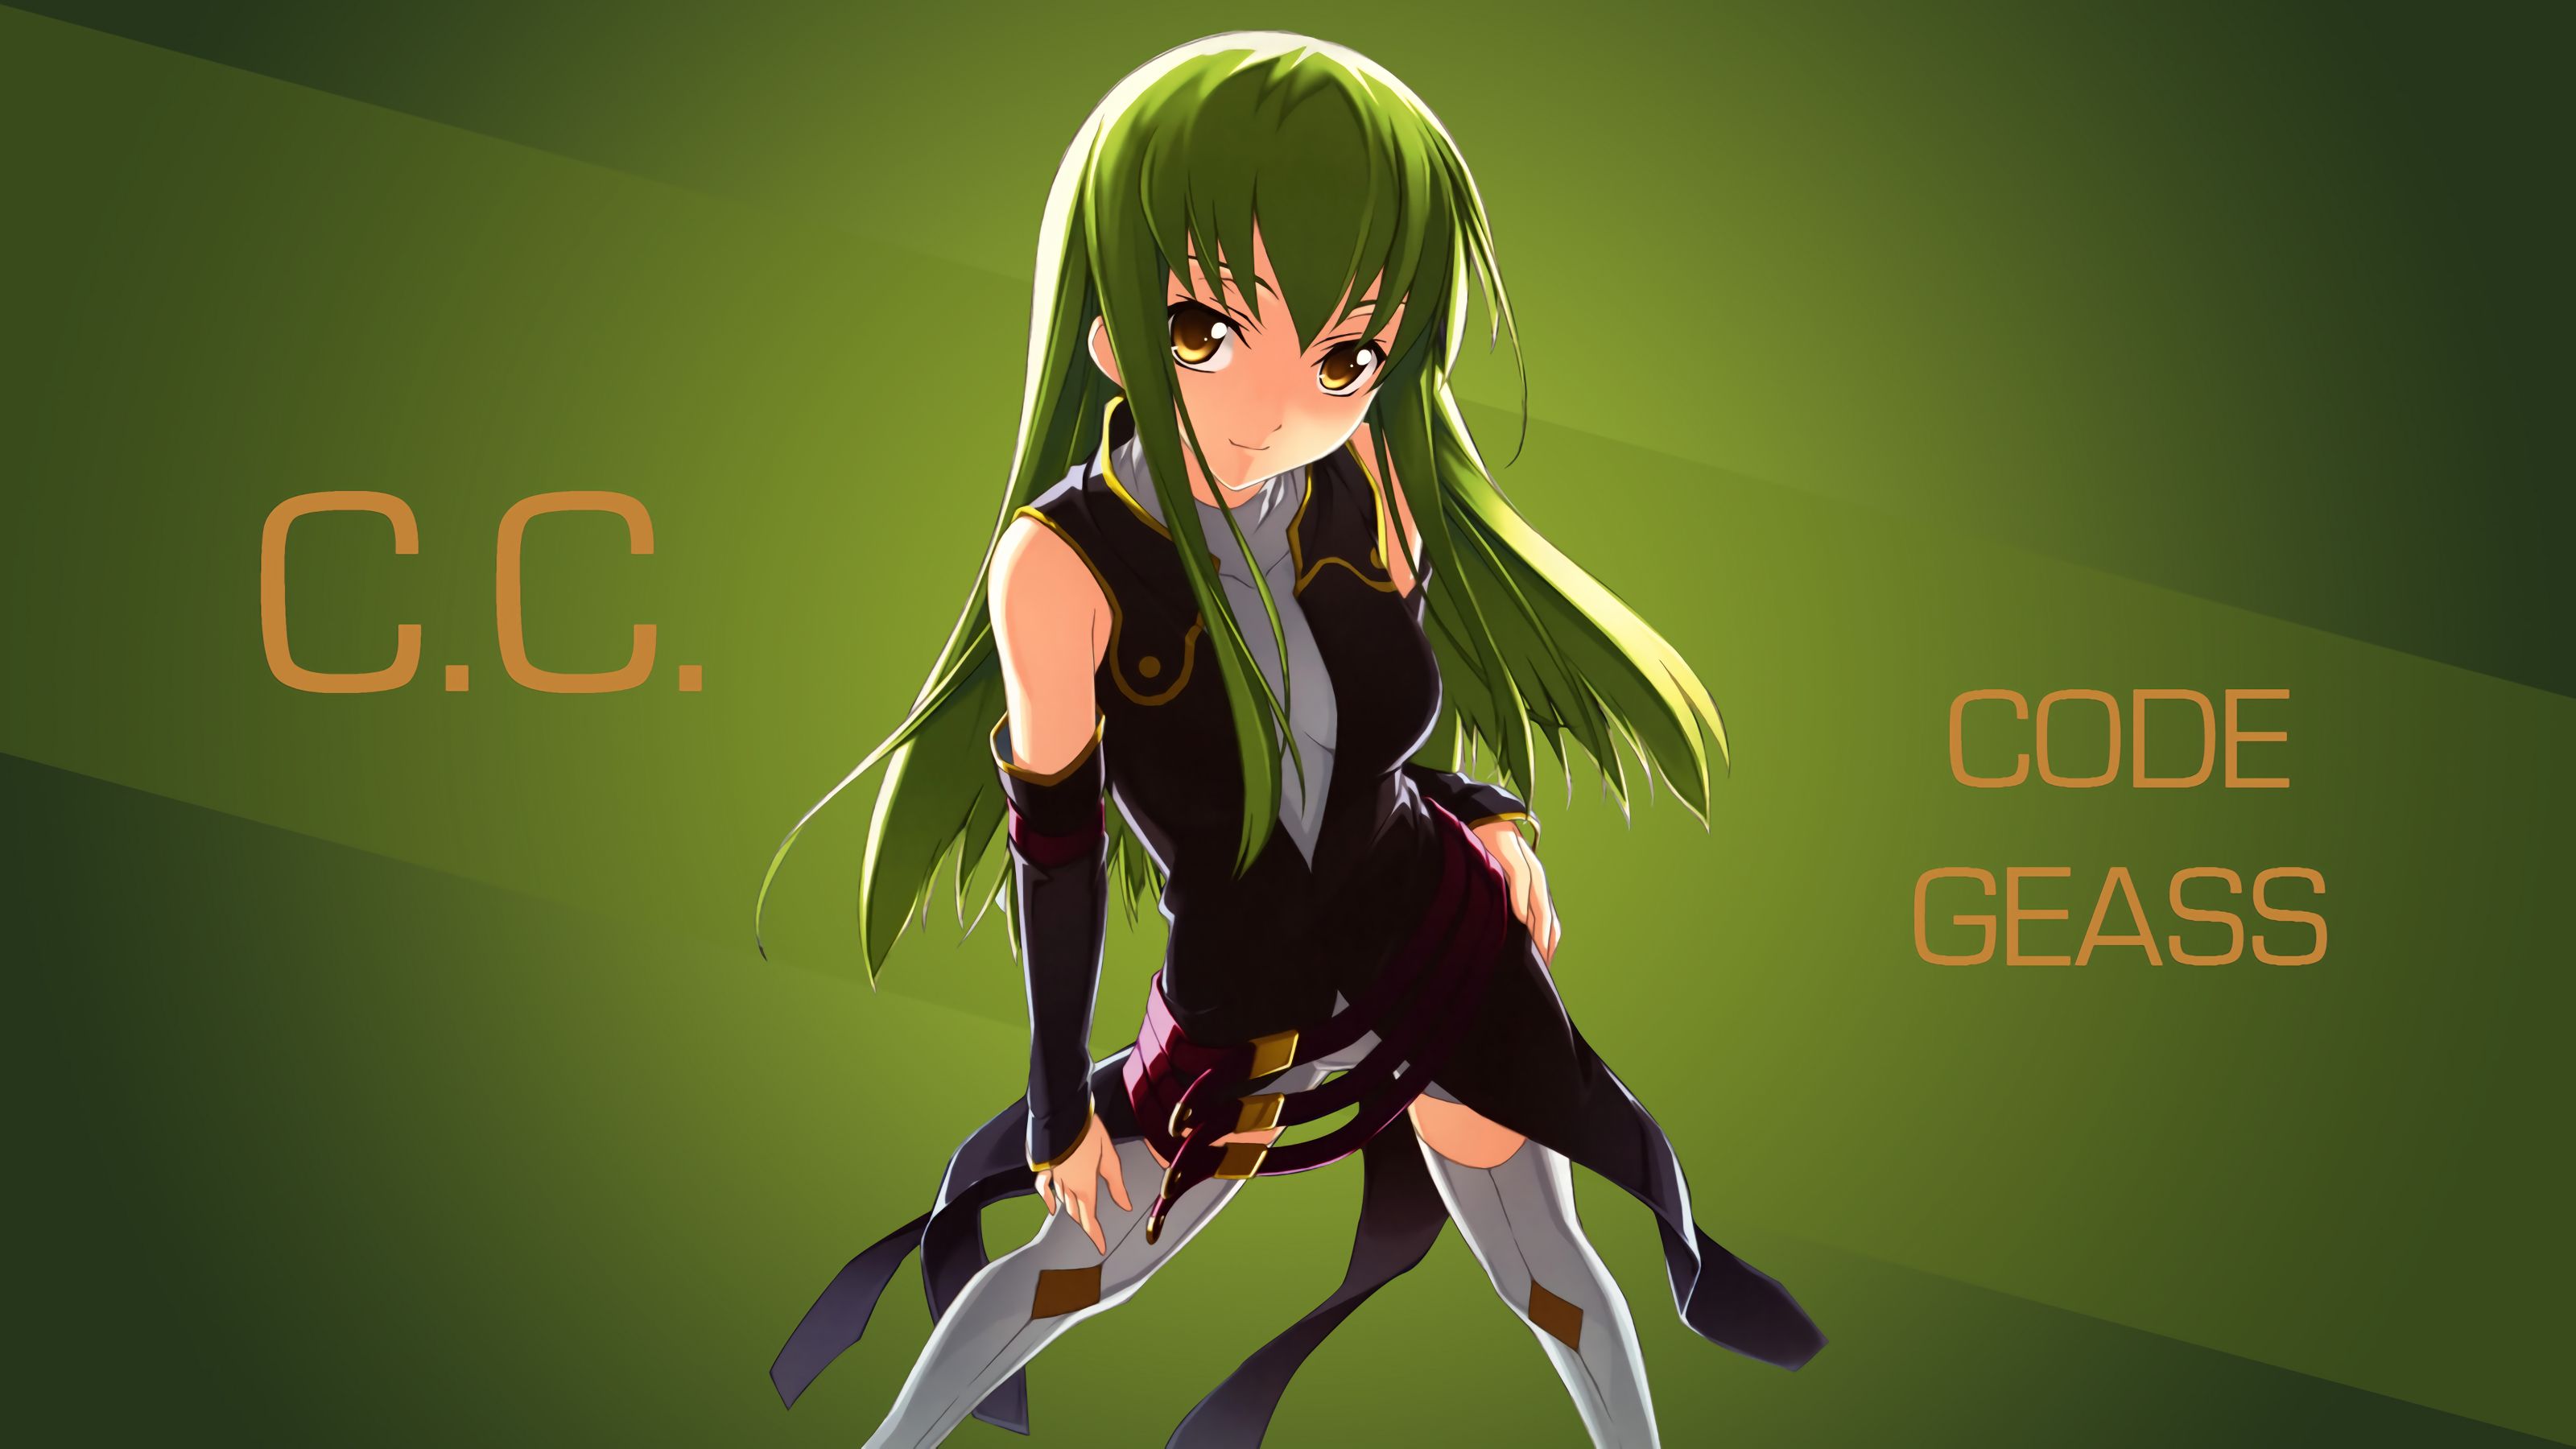 Code Geass HD Anime Wallpaper, C.C. Code Geass HD Mobile Wallpaper in 2023